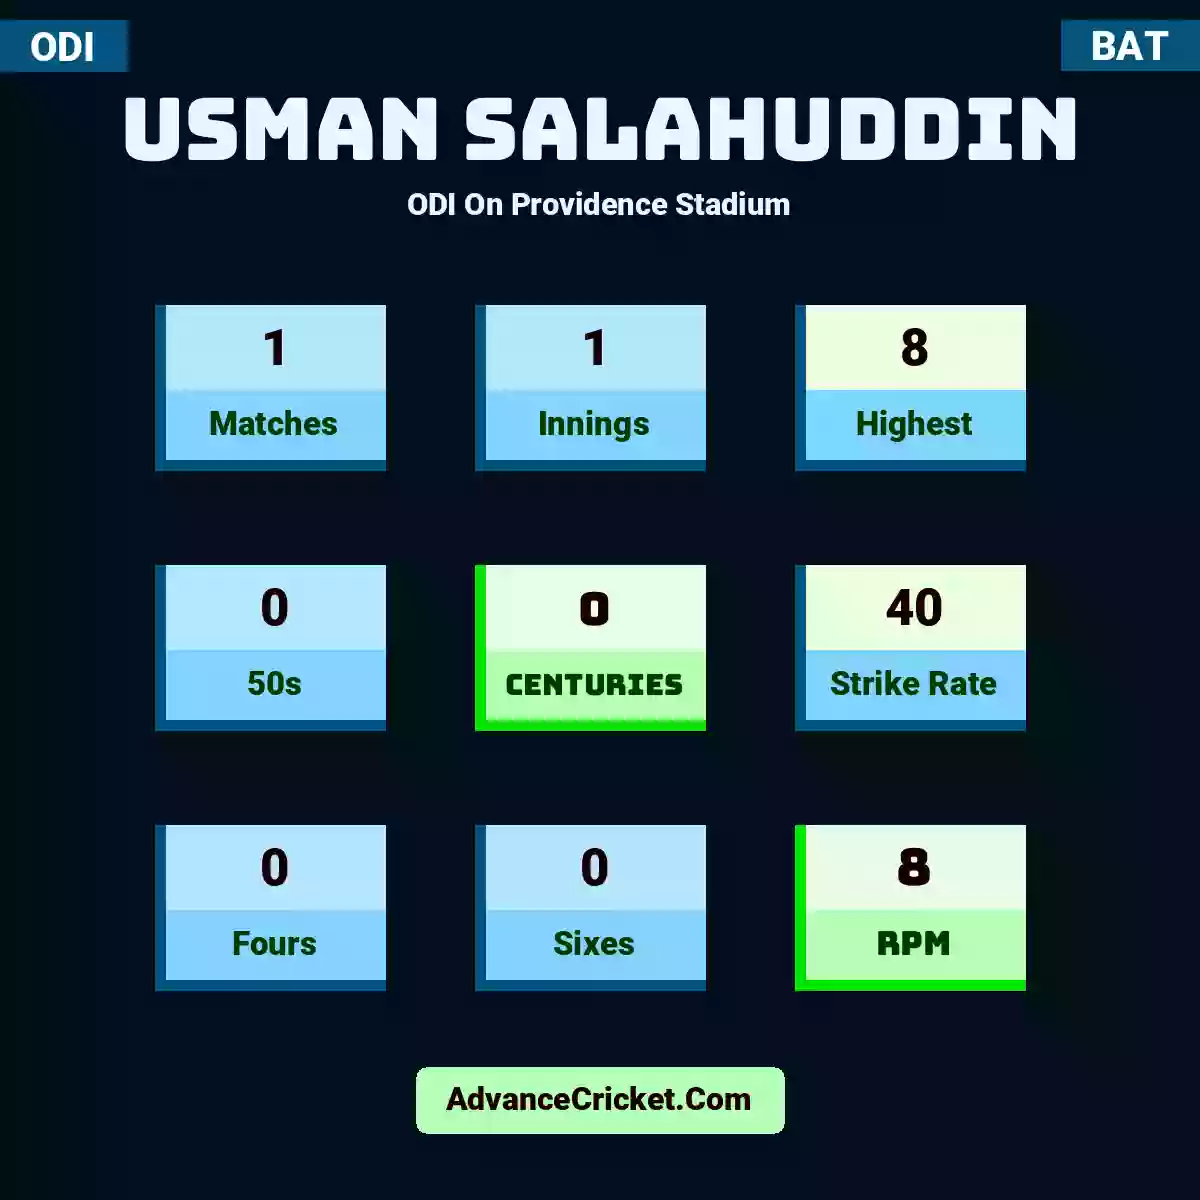 Usman Salahuddin ODI  On Providence Stadium, Usman Salahuddin played 1 matches, scored 8 runs as highest, 0 half-centuries, and 0 centuries, with a strike rate of 40. U.Salahuddin hit 0 fours and 0 sixes, with an RPM of 8.